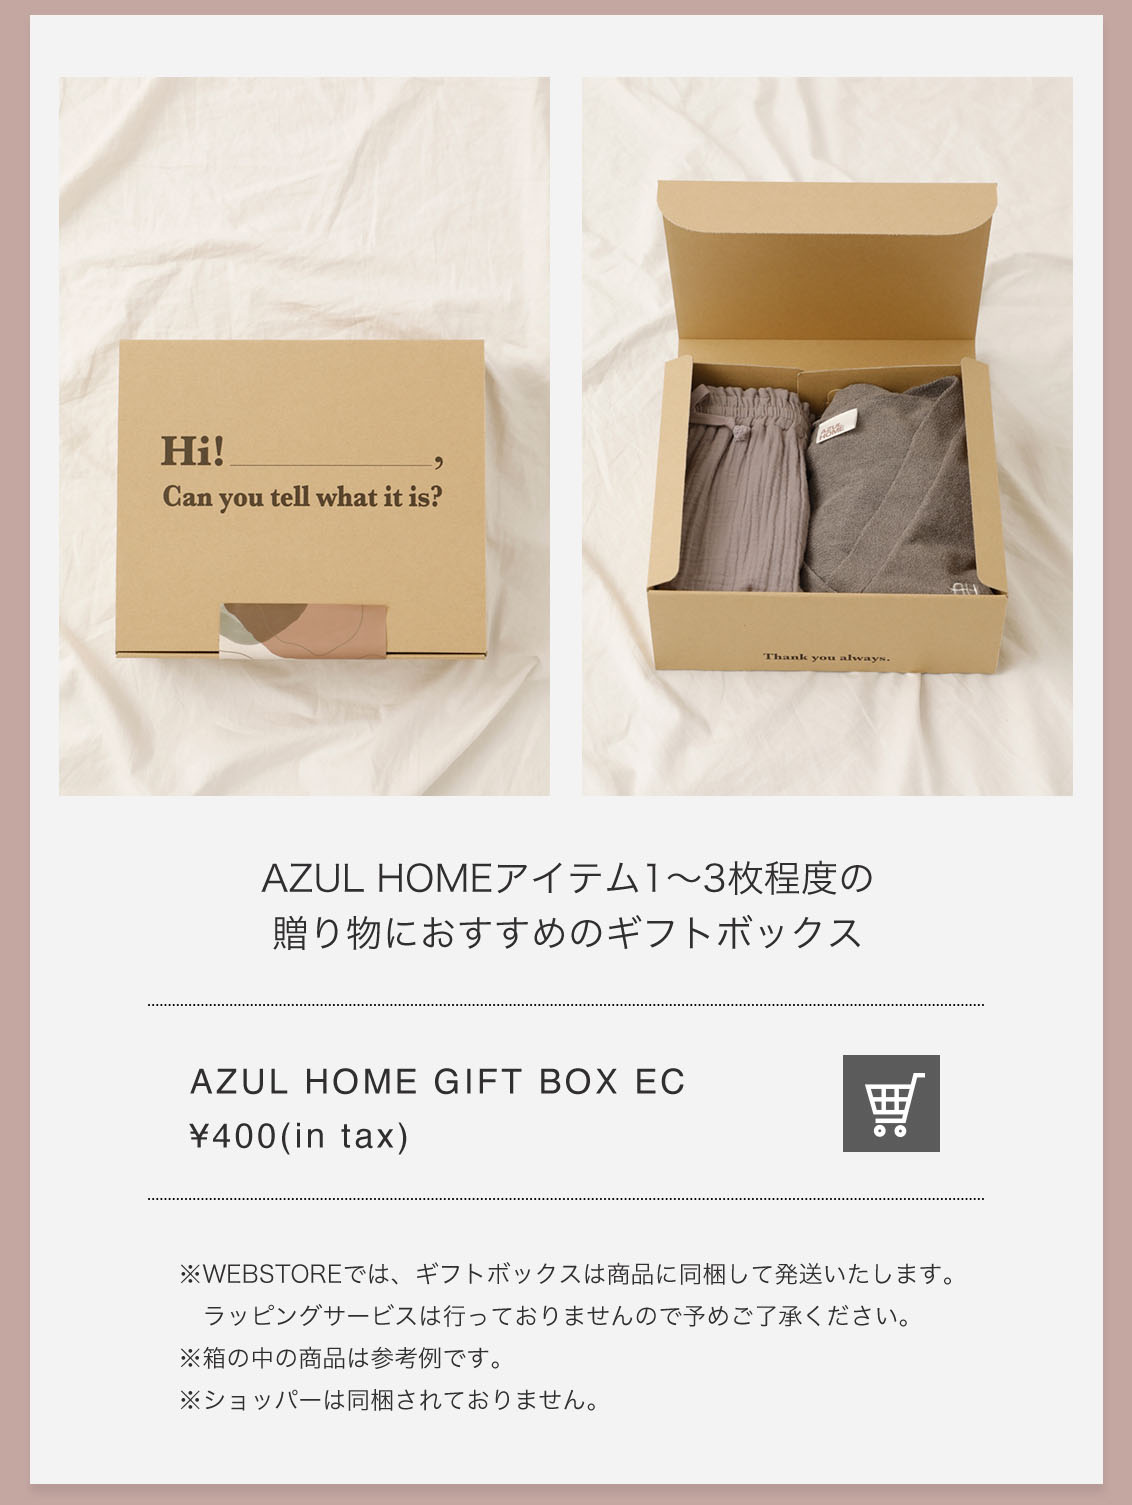 AZUL HOME GIFT BOX EC/AZULホームギフトボックスイーシー